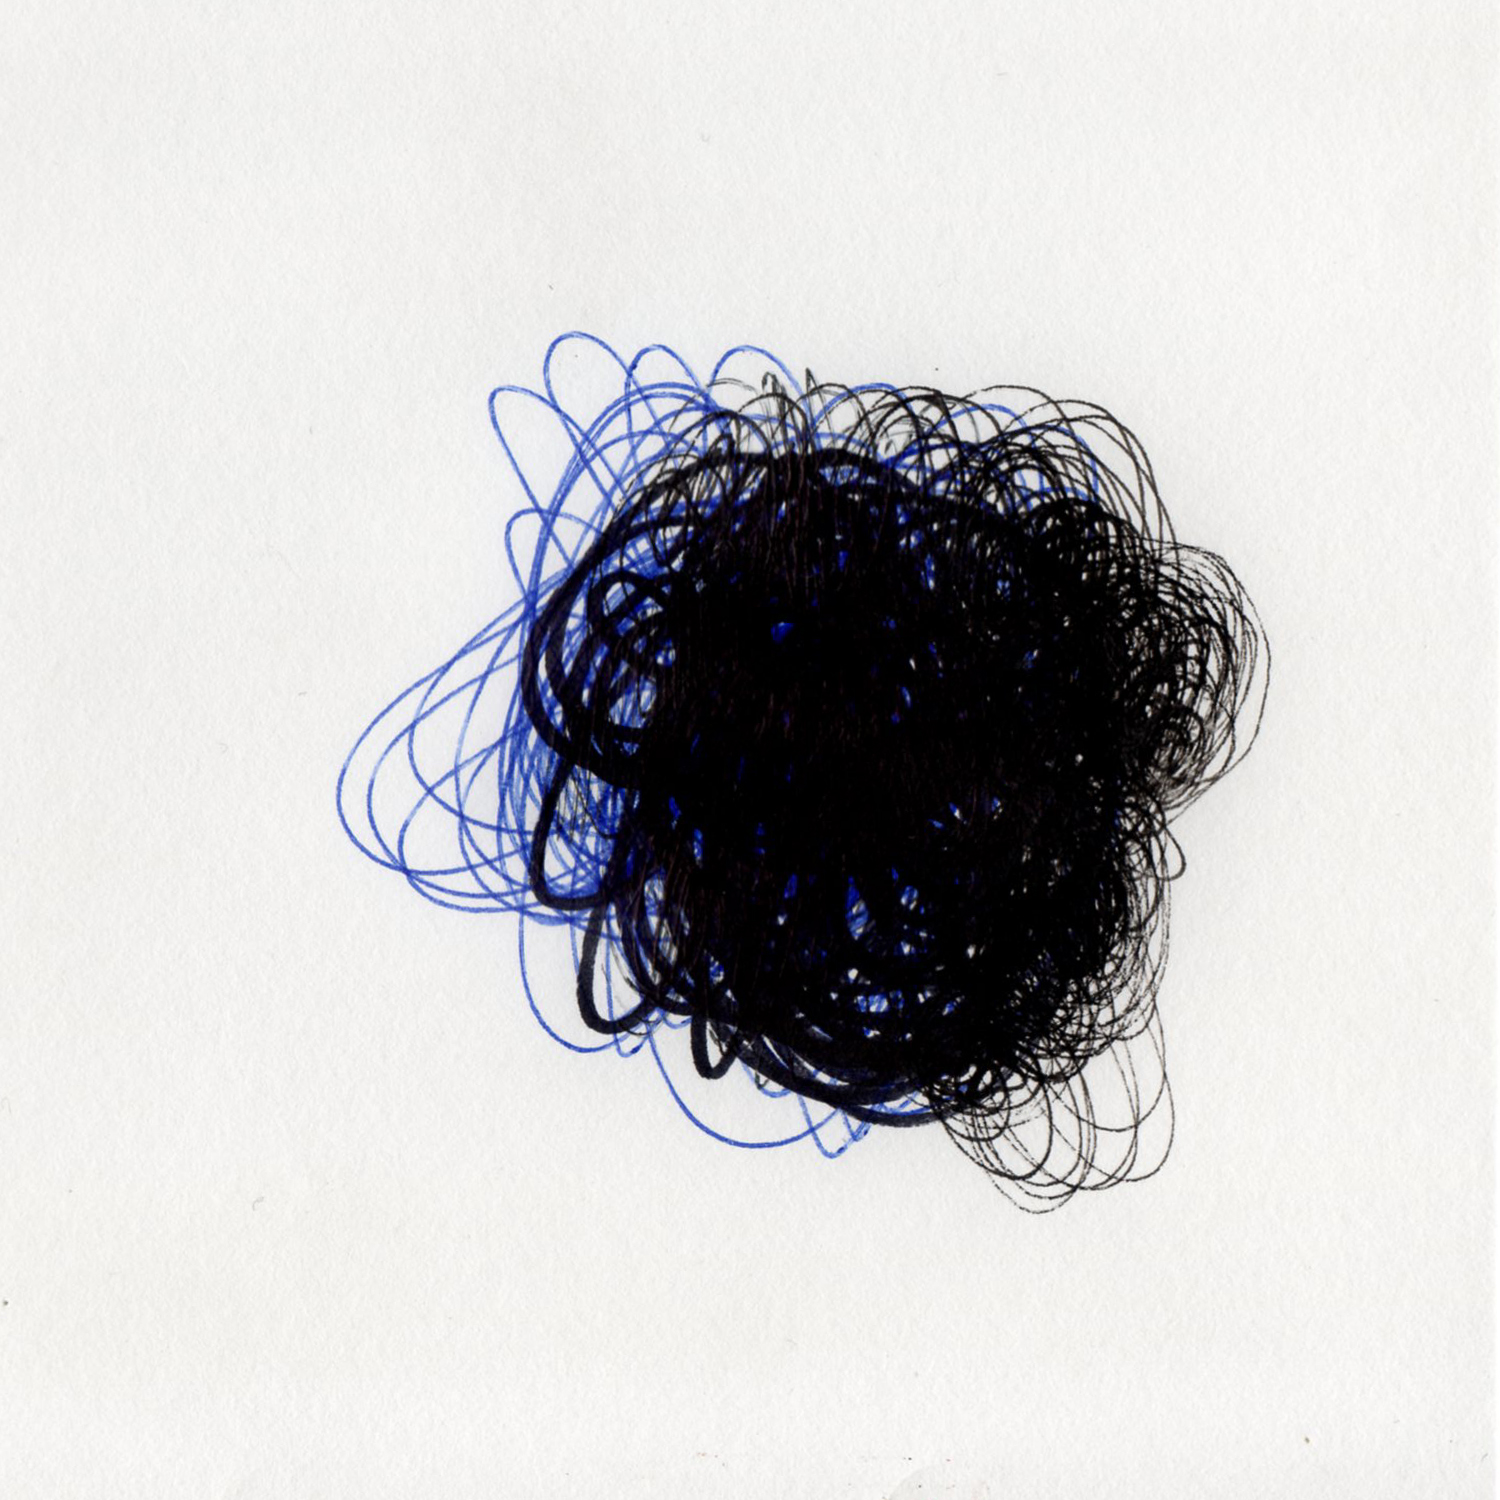   blob 5  pen on paper 5” x 5” 2014 